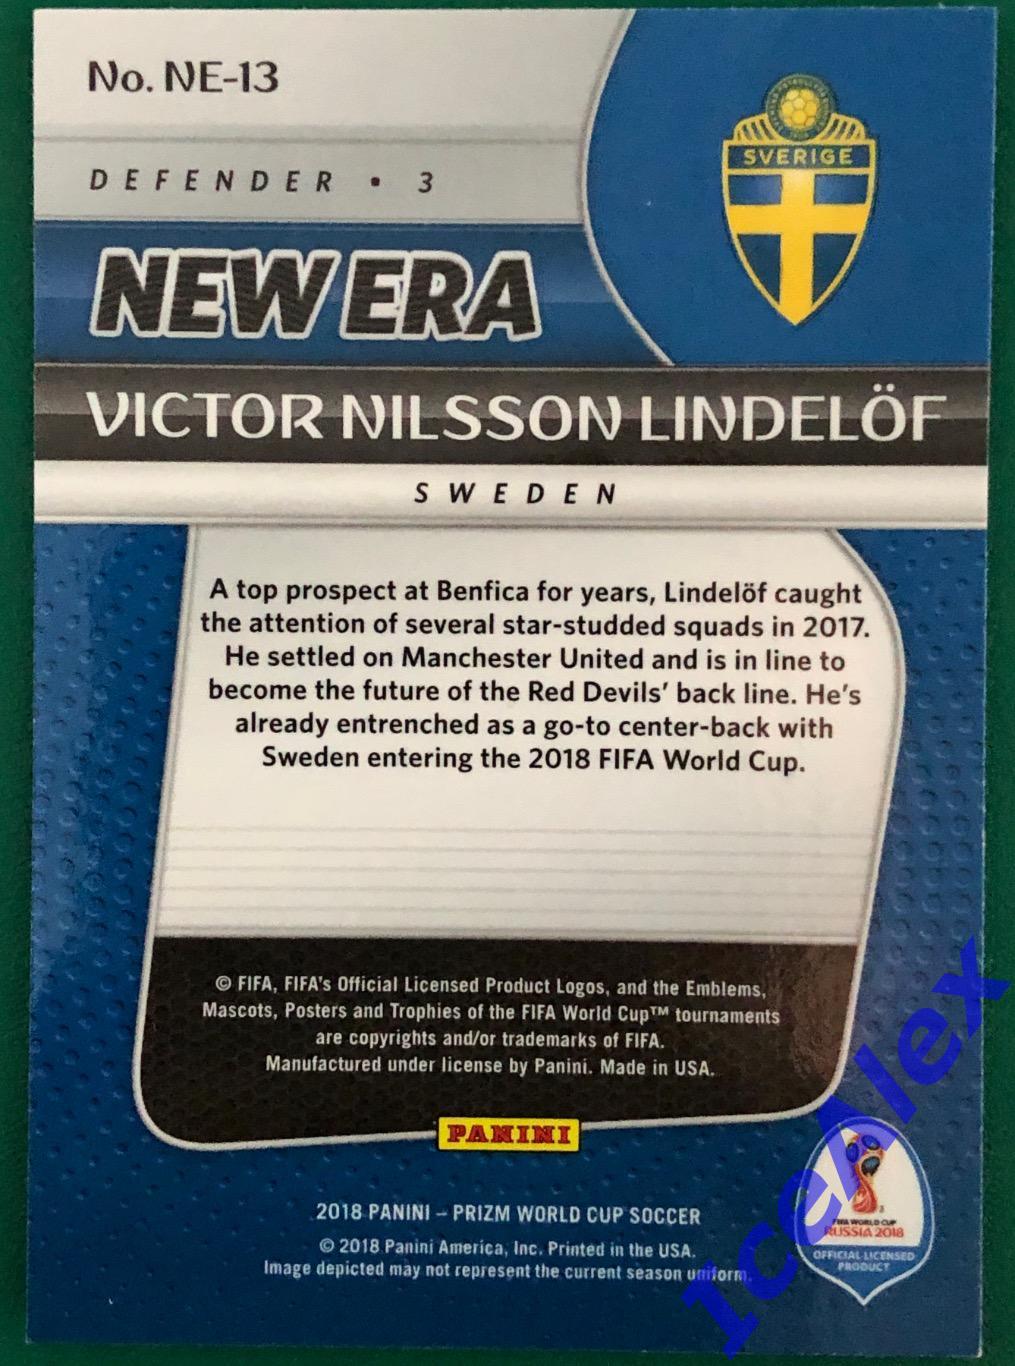 2018 Panini Prizm World Cup, New Era, #NE-13, Victor Nilsson Lindelof, Sweden 1